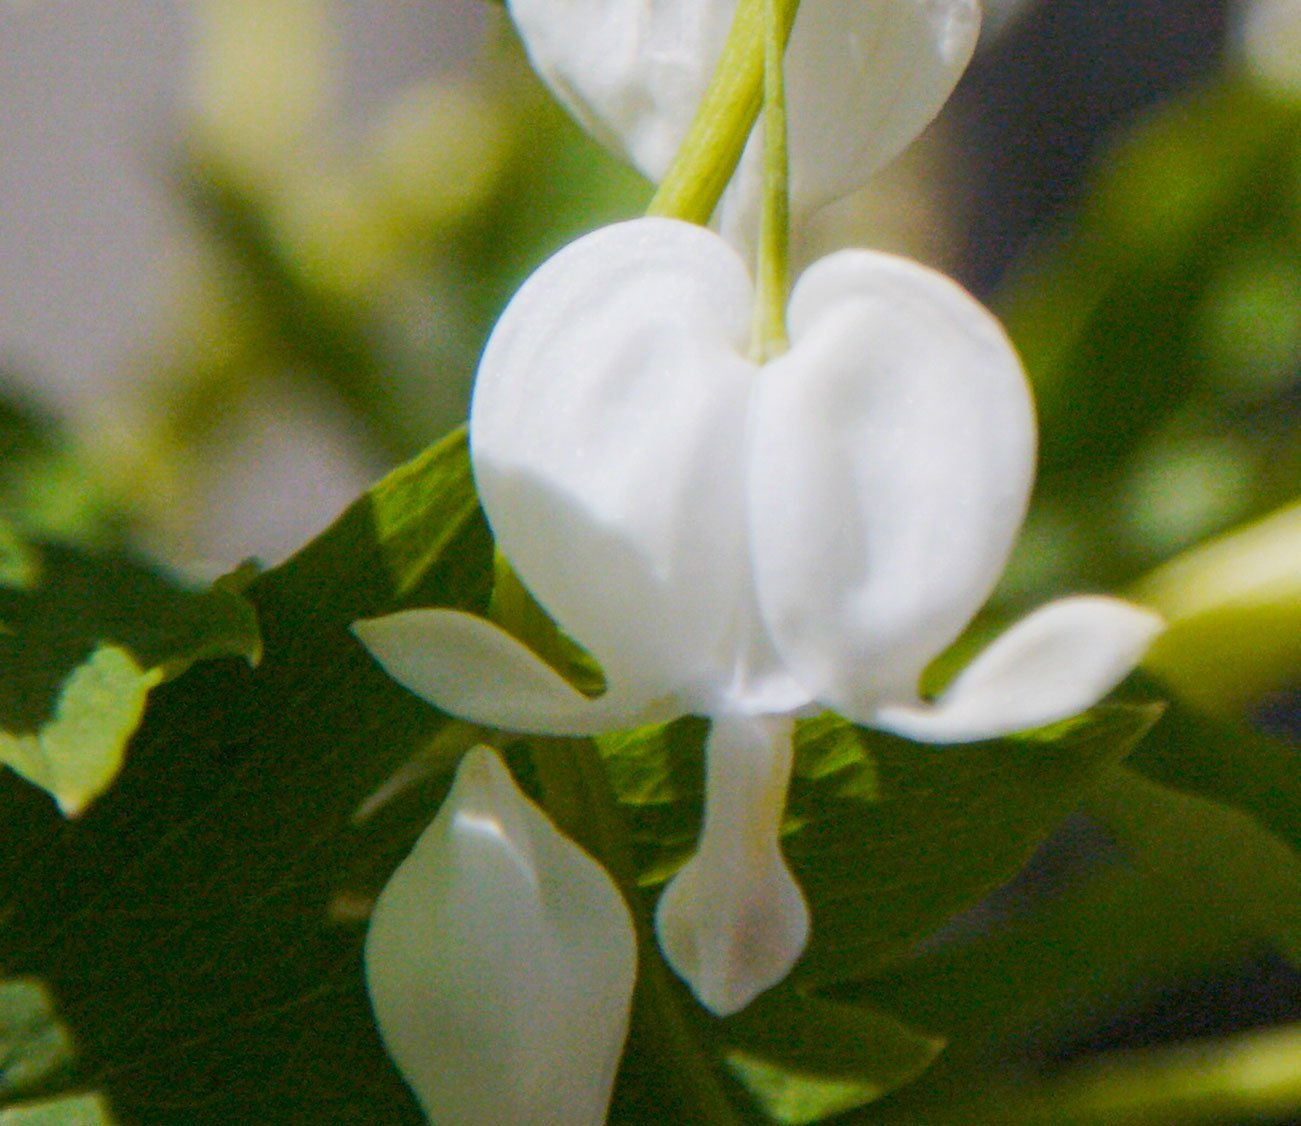 An beautiful example of WHITE Bleeding heart Florets!